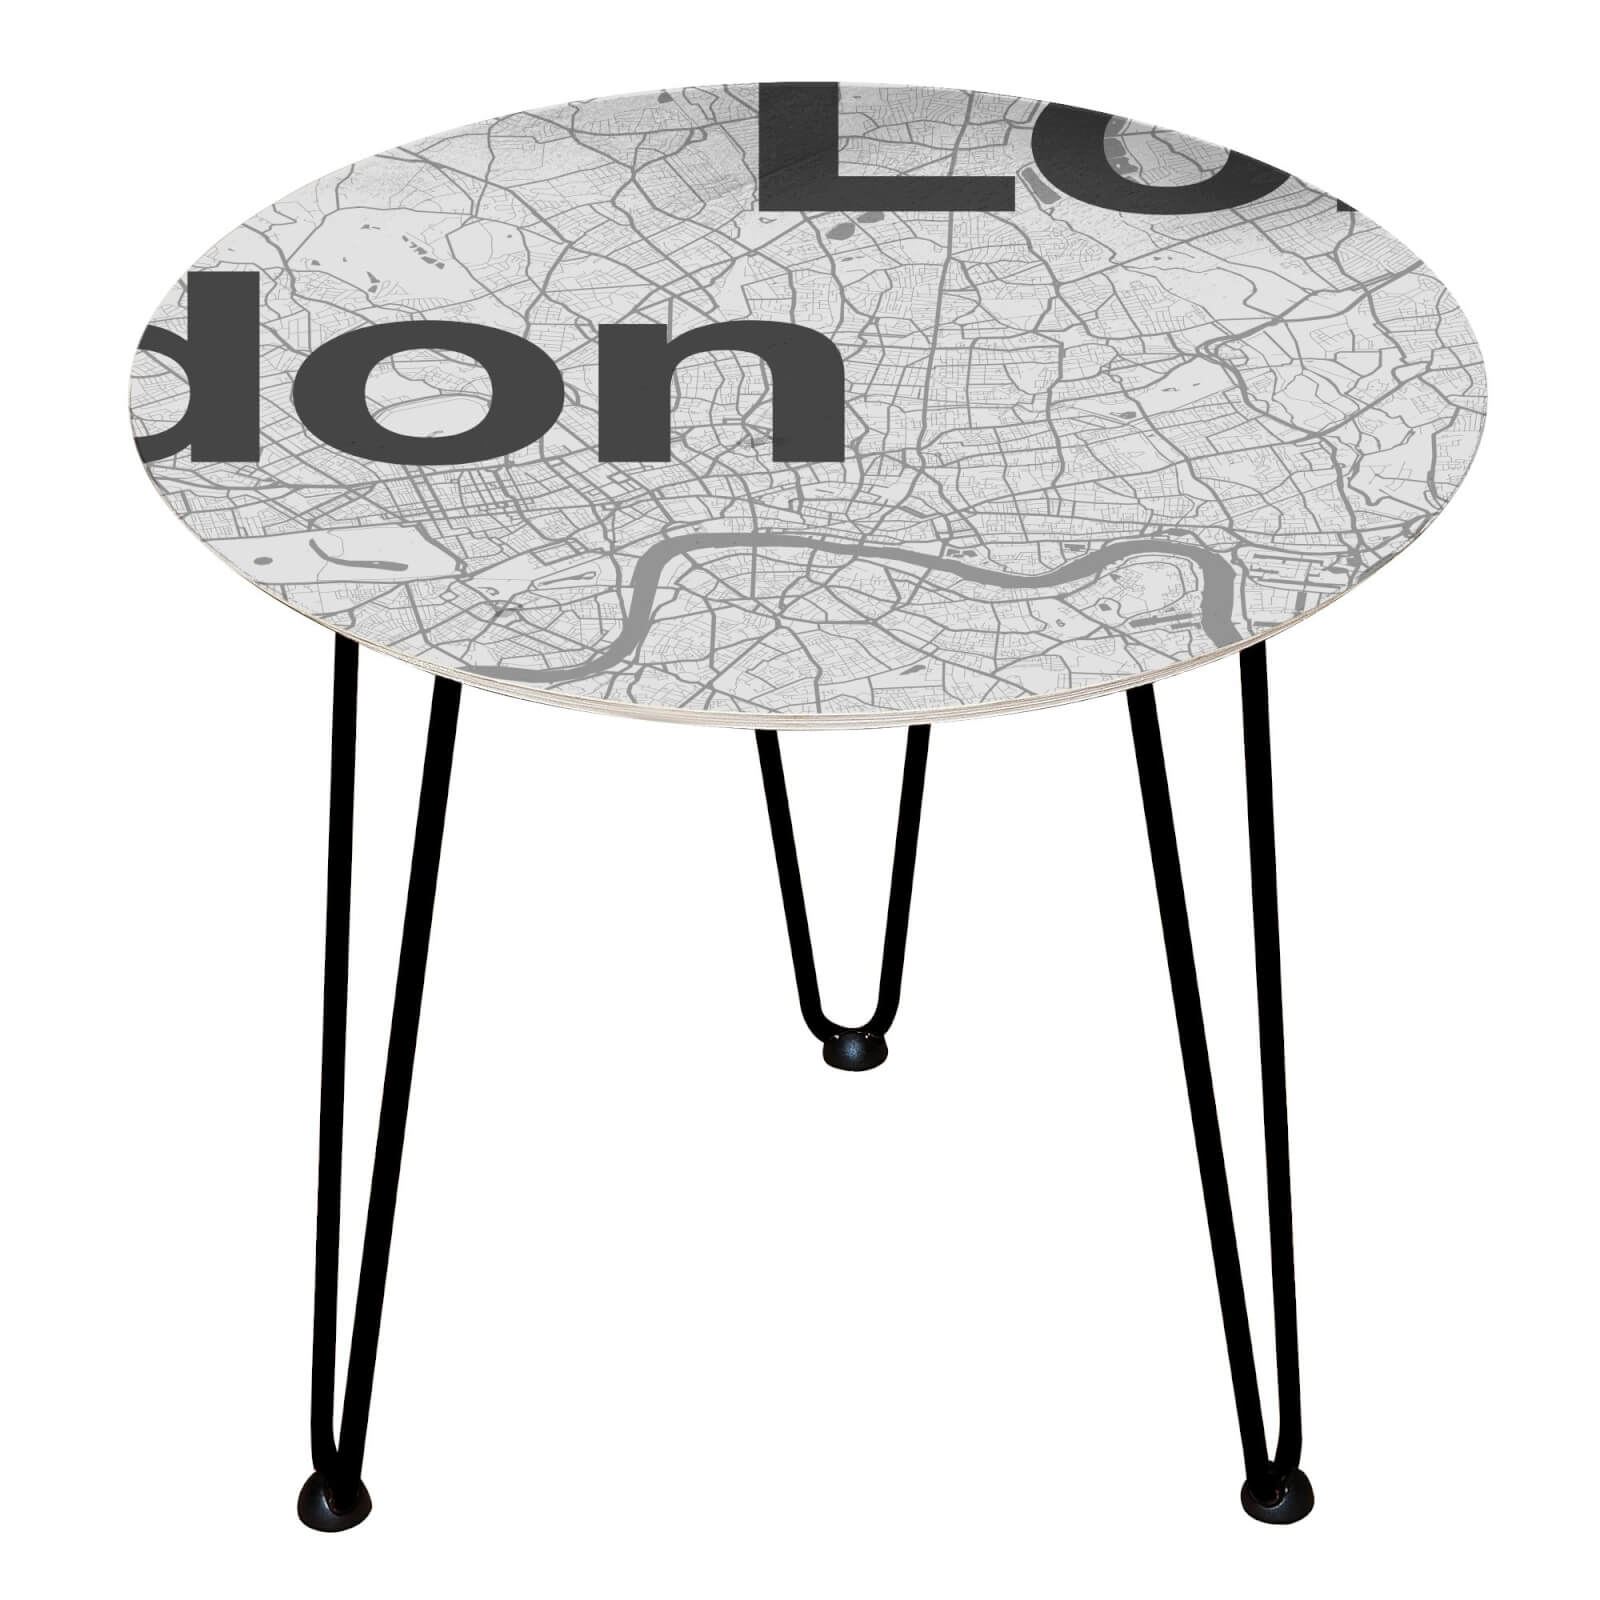 London Minimalist Map Wooden Side Table - Black